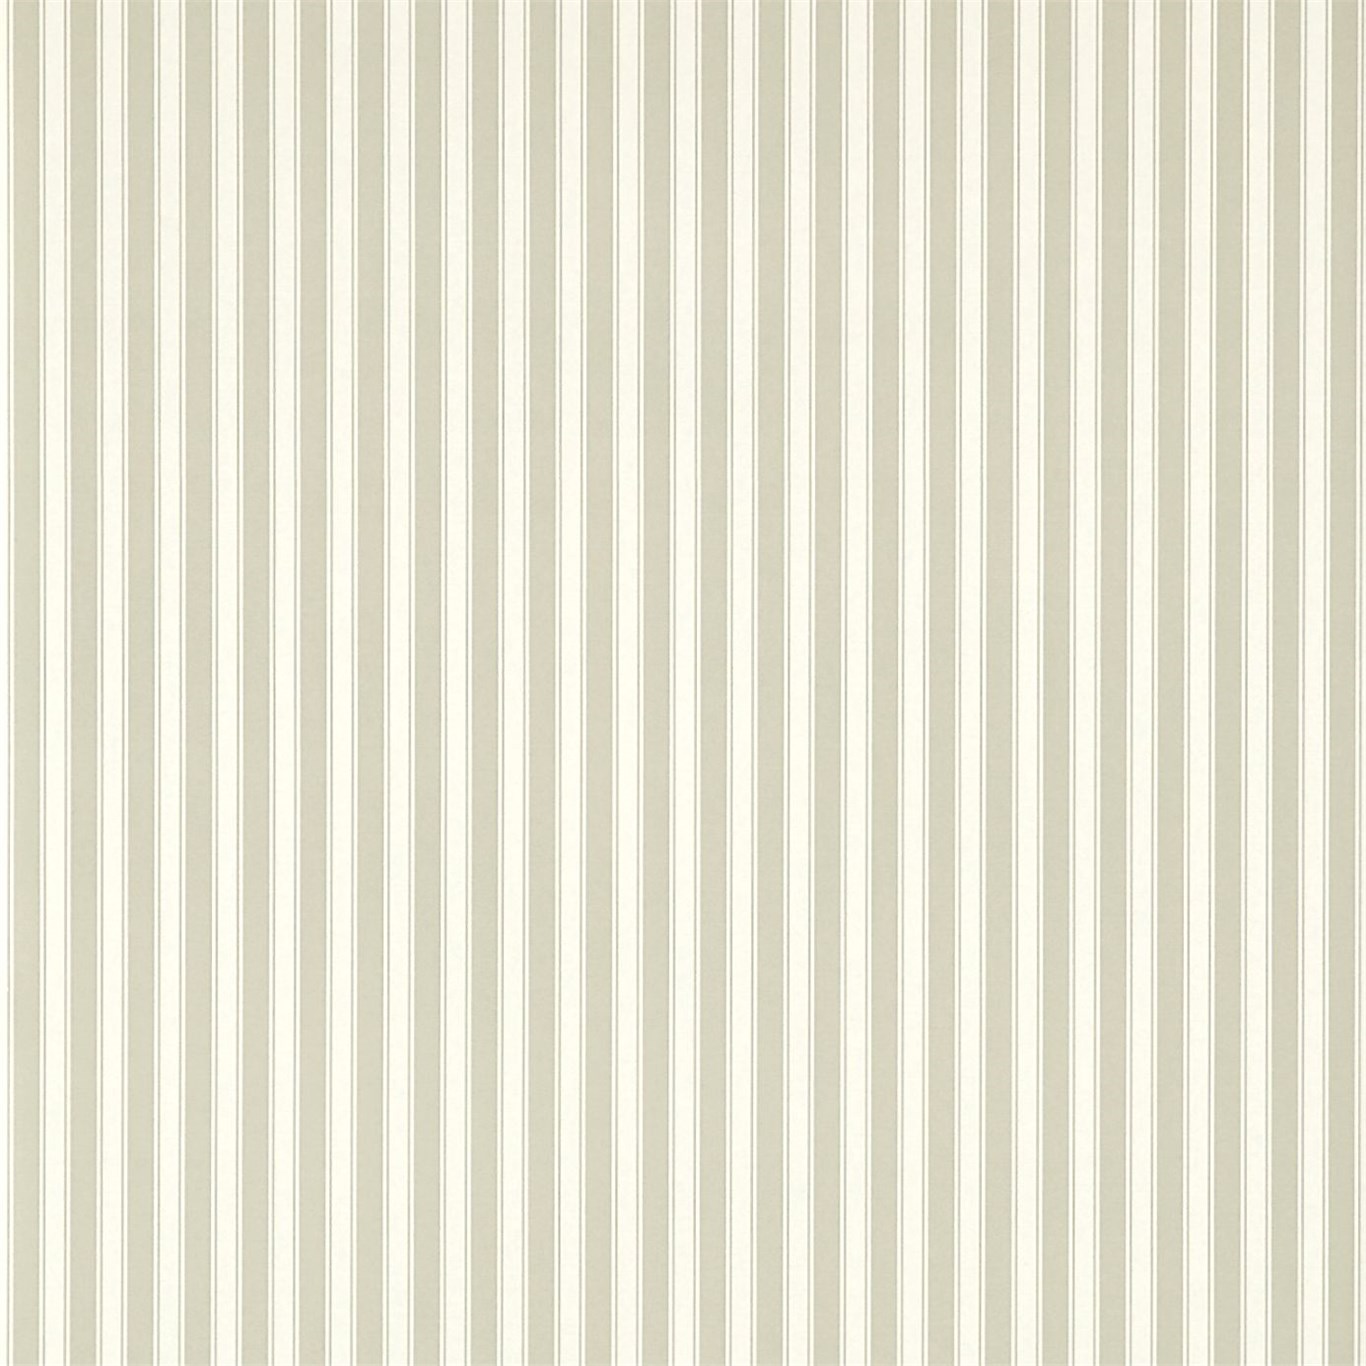 Wallpaper - Sanderson Caverley Wallpapers New Tiger Stripe Linen/Calico